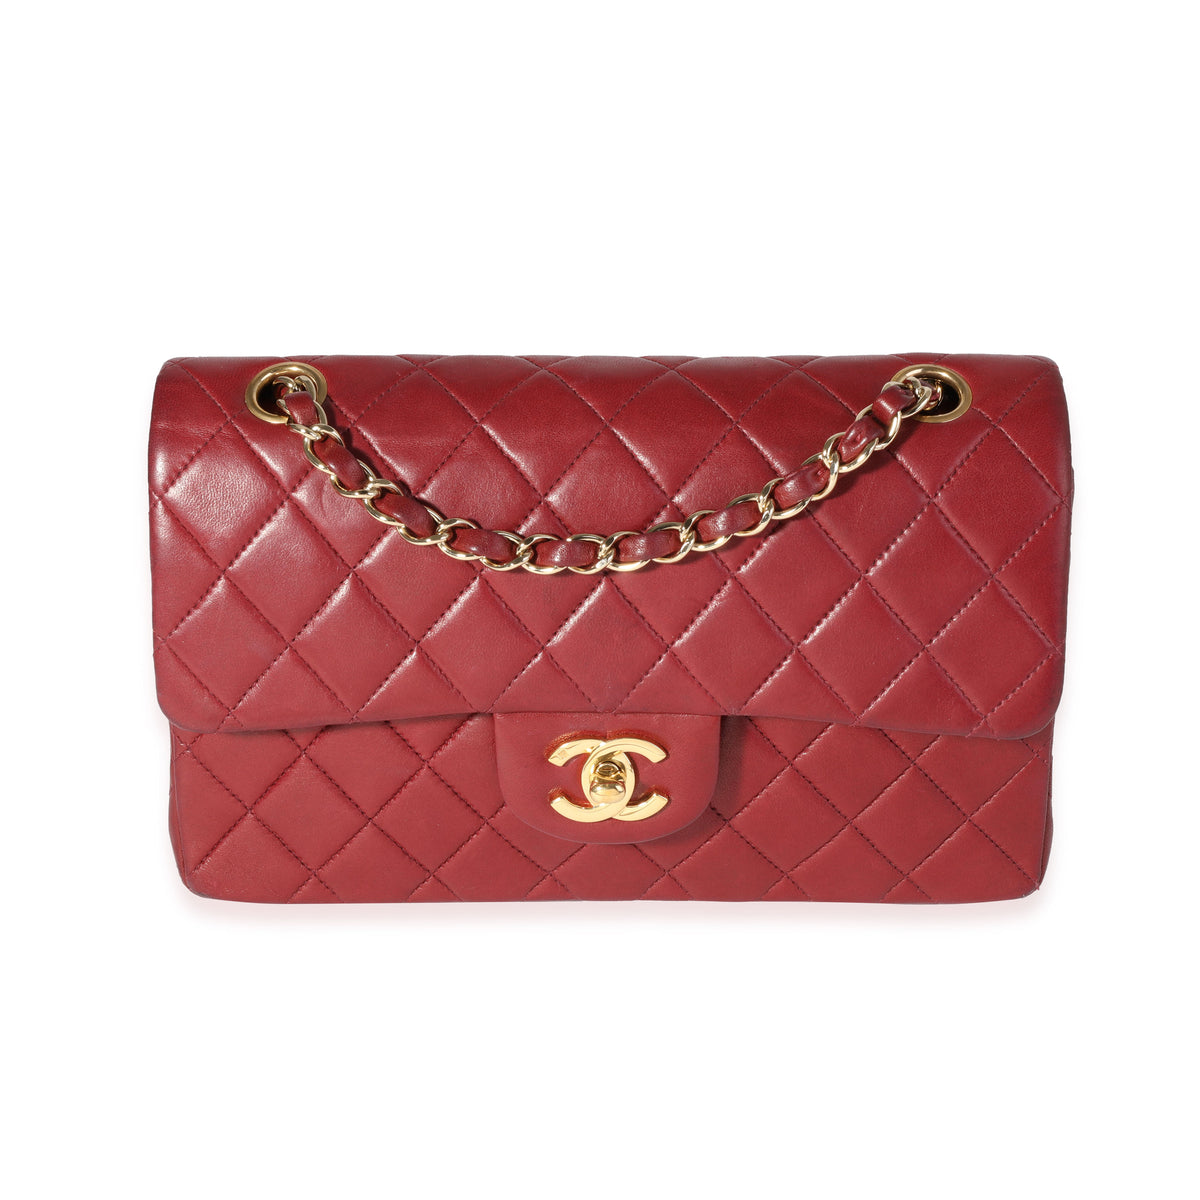 Chanel Timeless Small Flap bag Burgundy